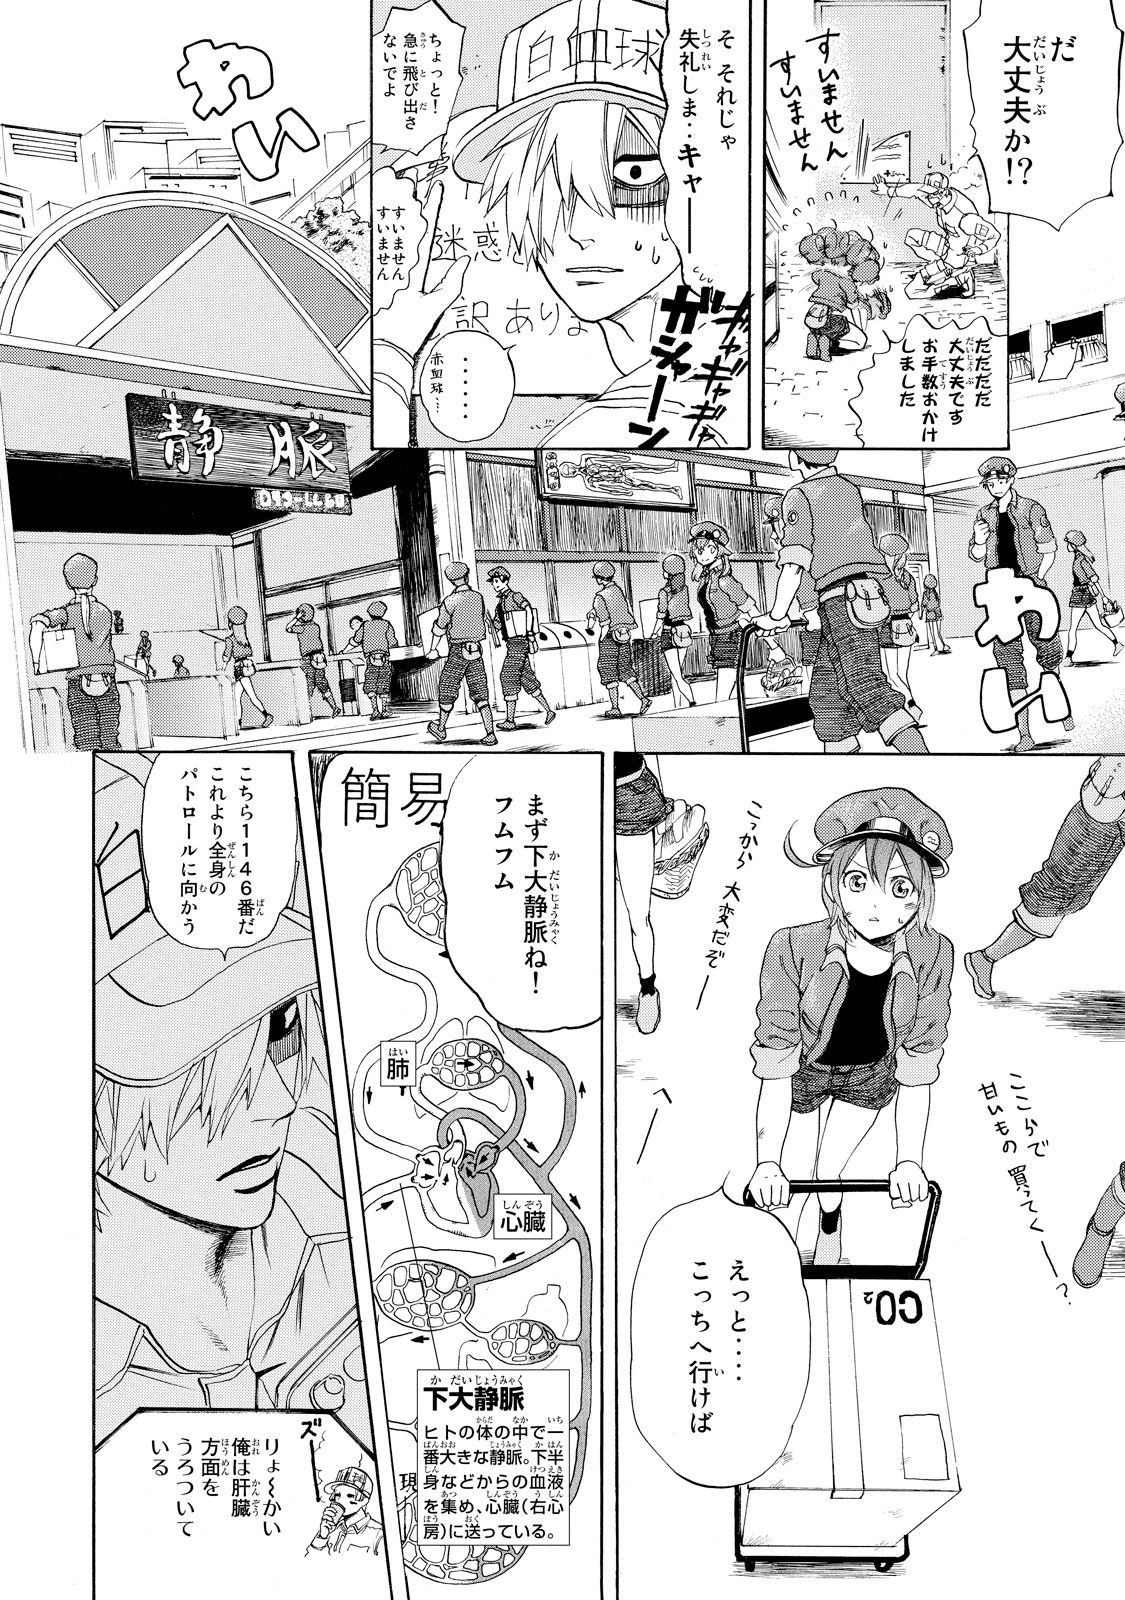 Hataraku Saibou - Chapter 10 - Page 10